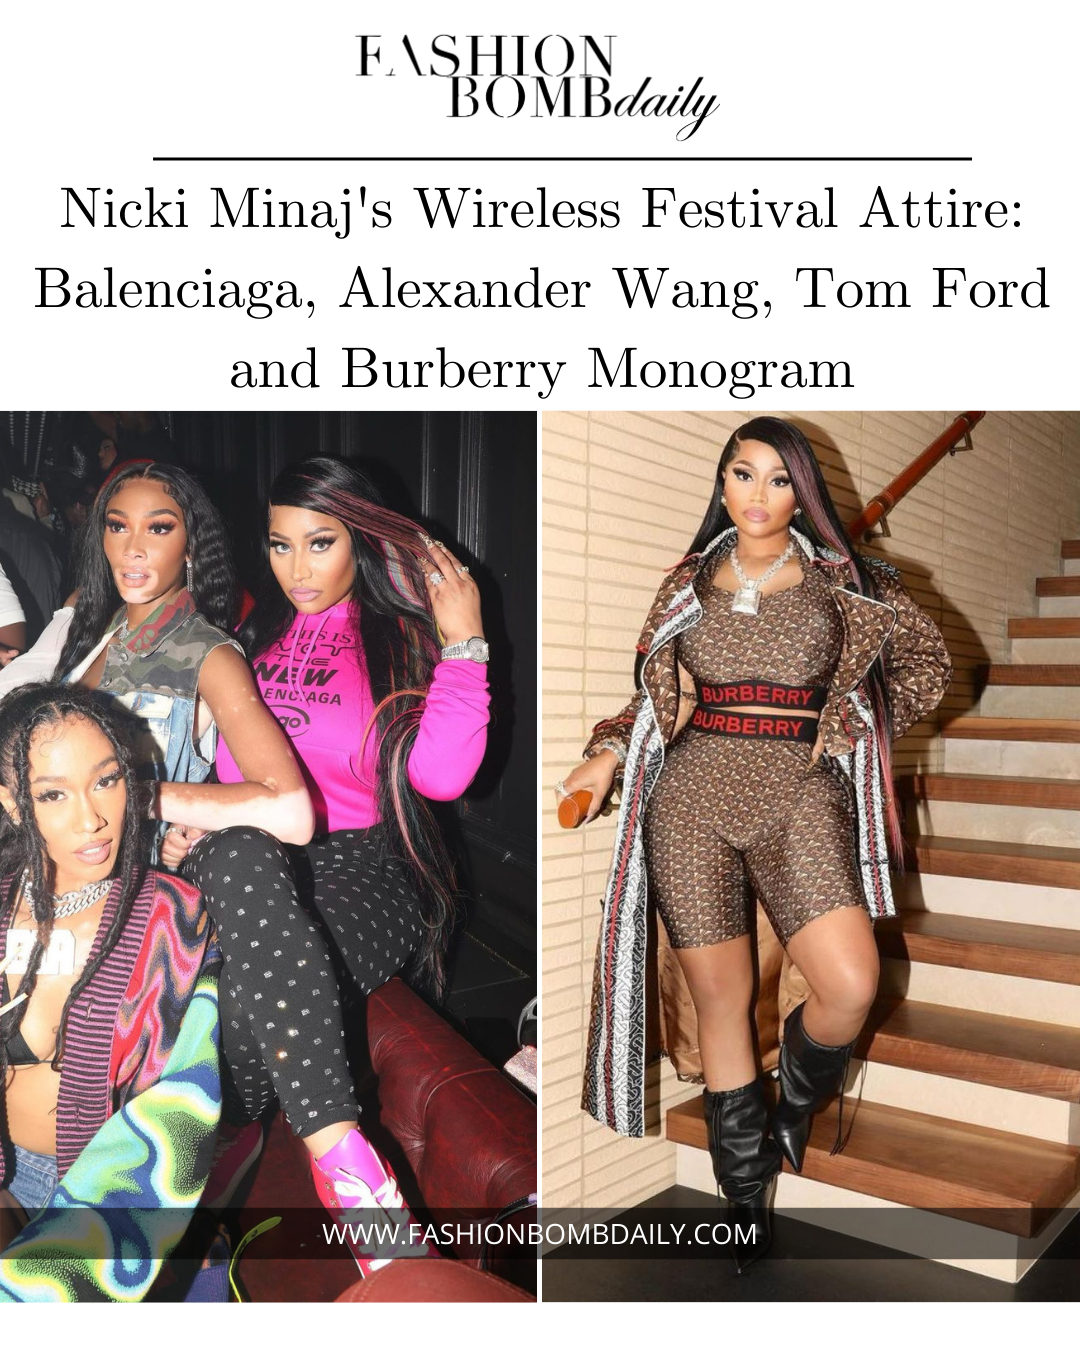 Nicki Minaj's Wireless Festival Attire: Balenciaga, Alexander Wang